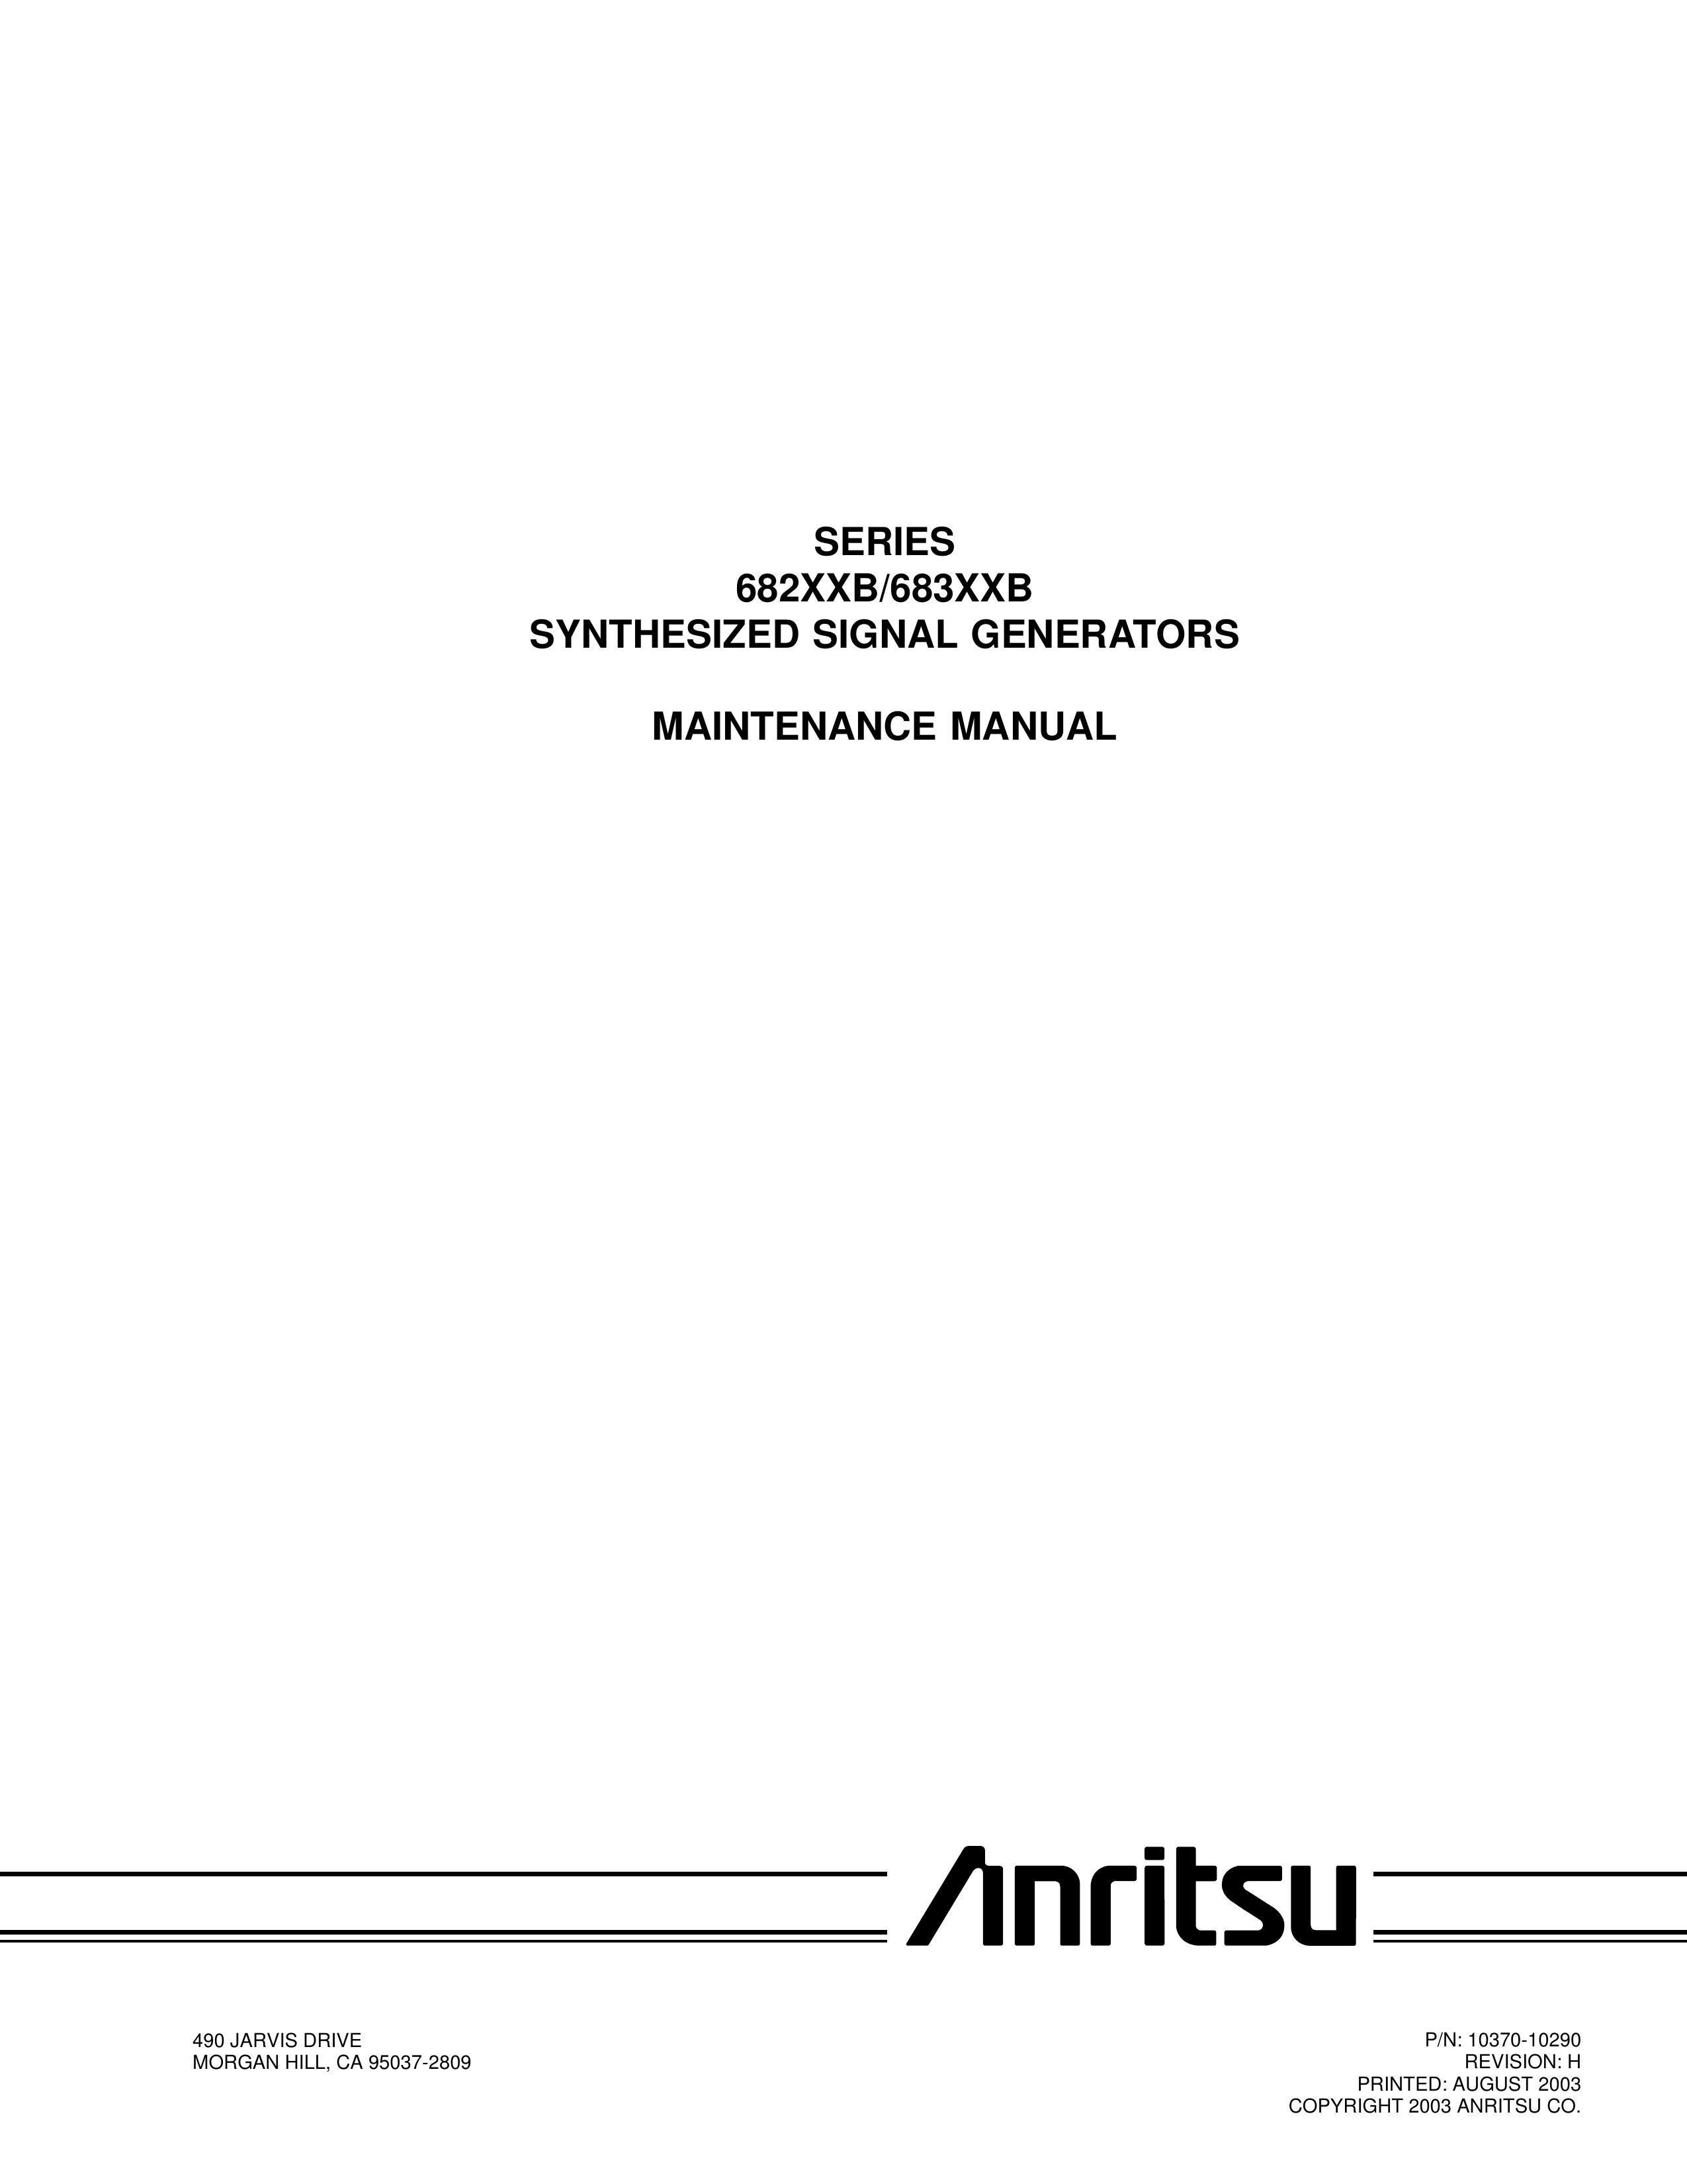 Anritsu 682XXB Portable Generator User Manual